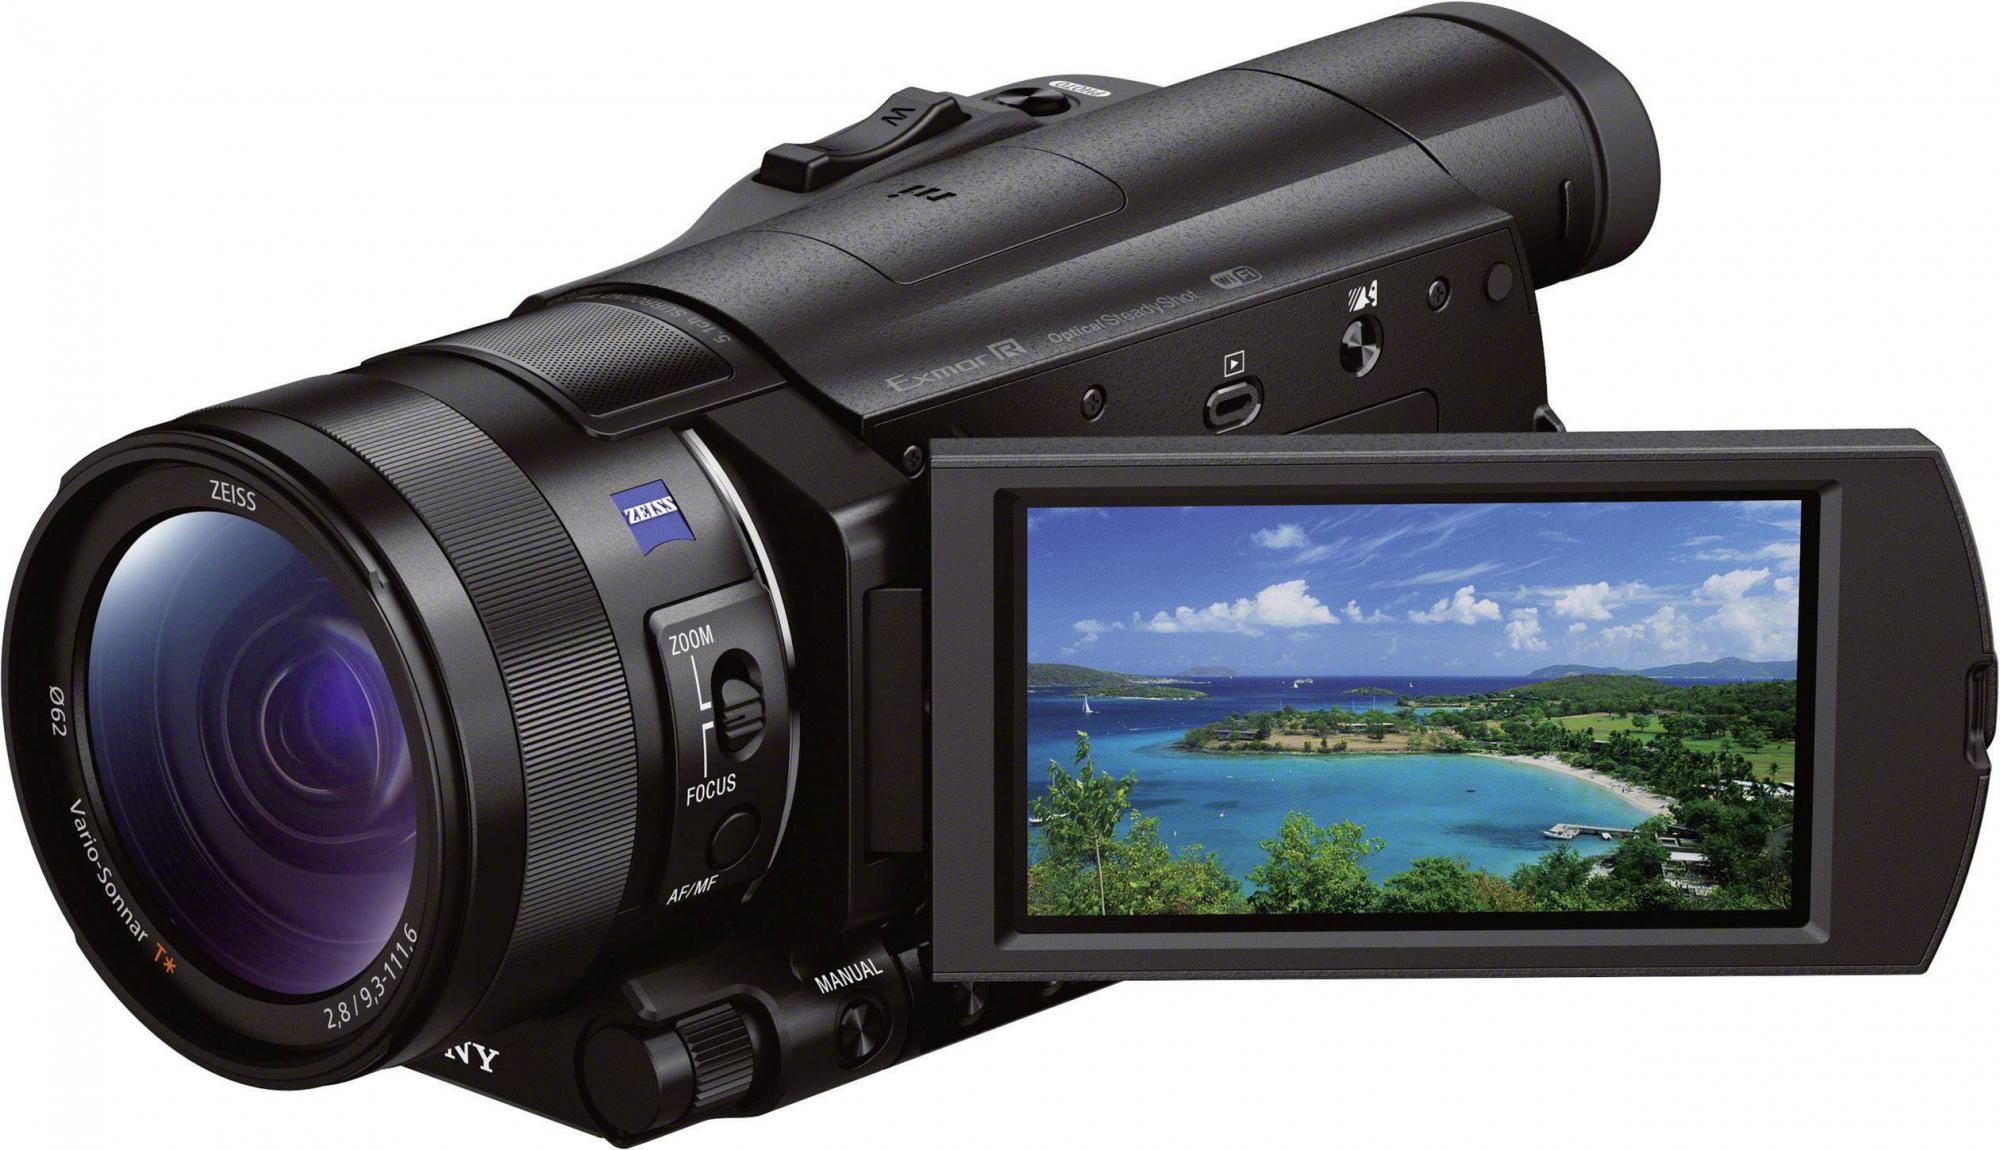 Sony FDR-AX100 4K kamera